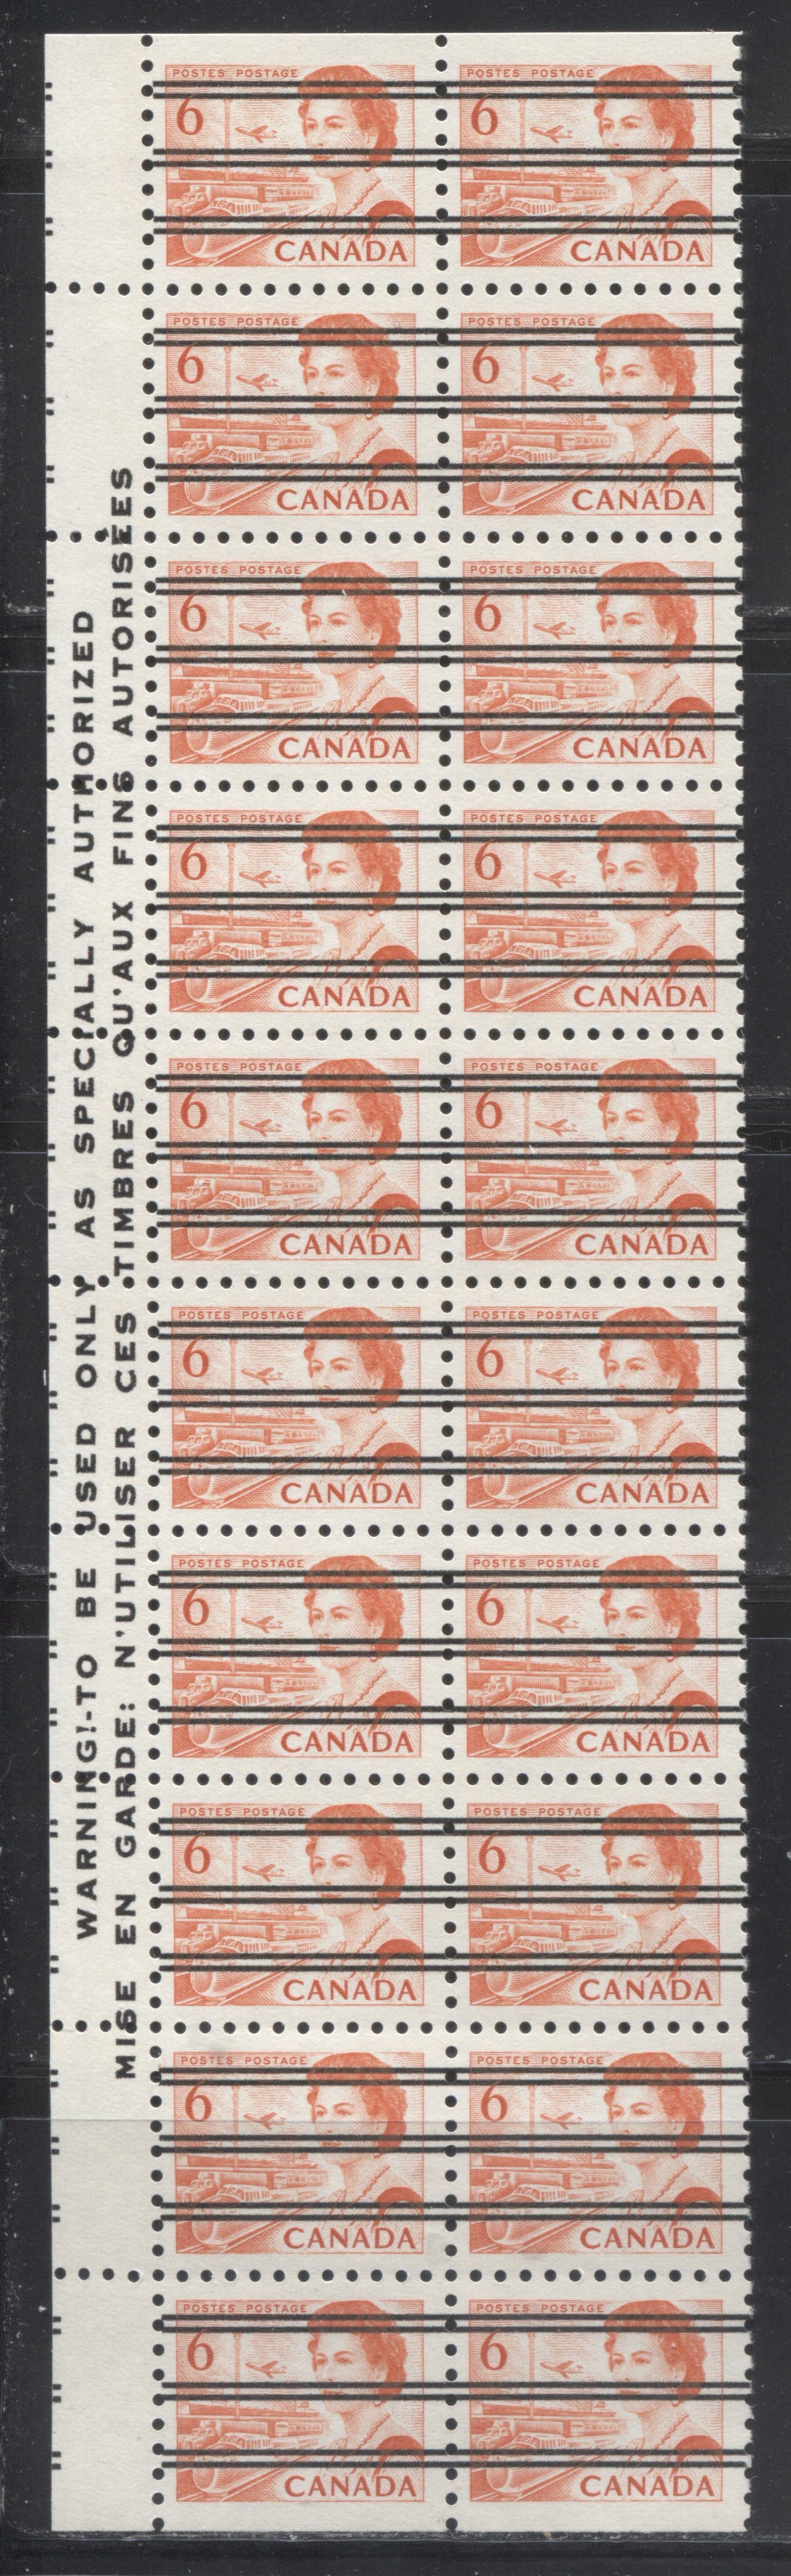 Lot 148 Canada #459xx 6c Red Orange Transportation, 1967-1973 Centennial Definitive Issue, A VFNH Left Precancel Warning Strip of 20